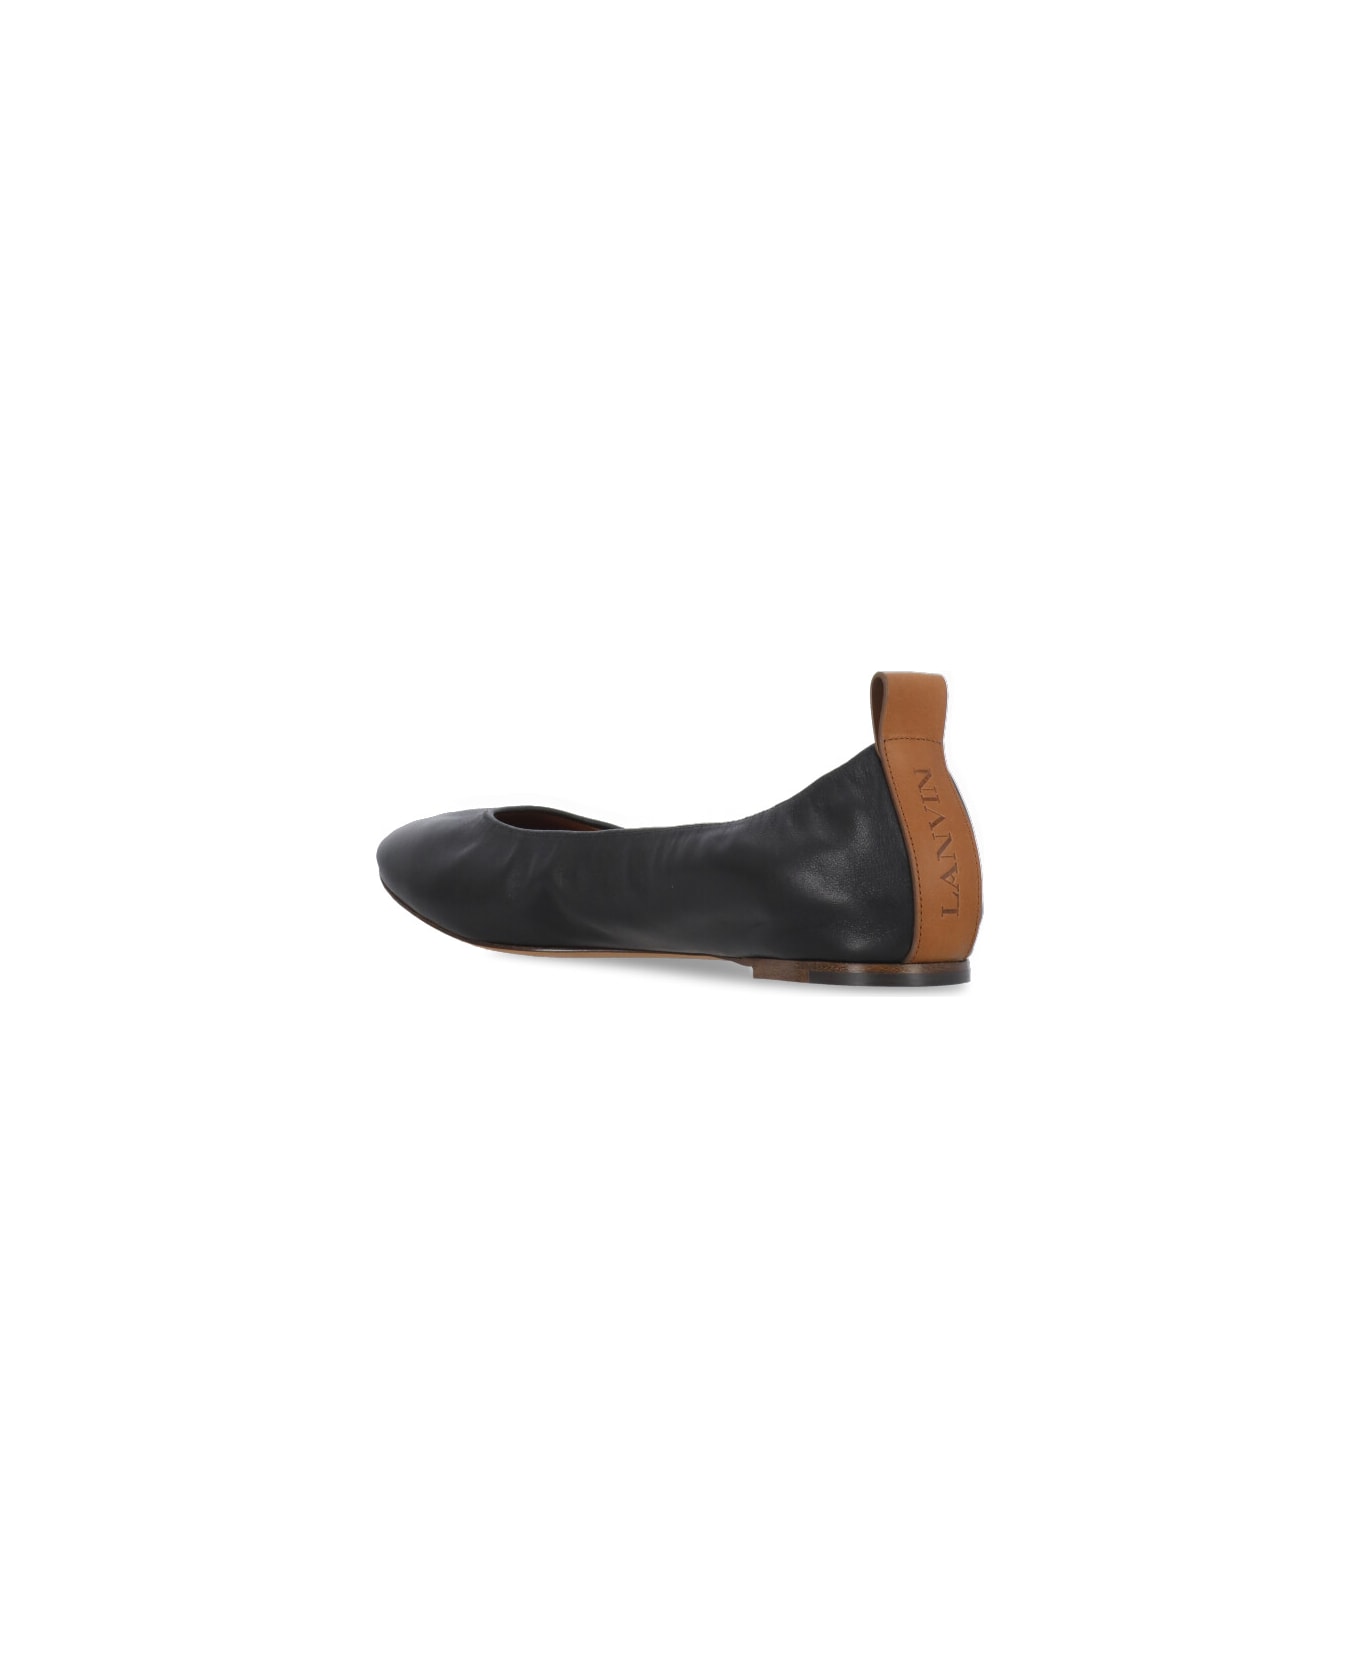 Lanvin Leather Ballet Shoes - Black フラットシューズ